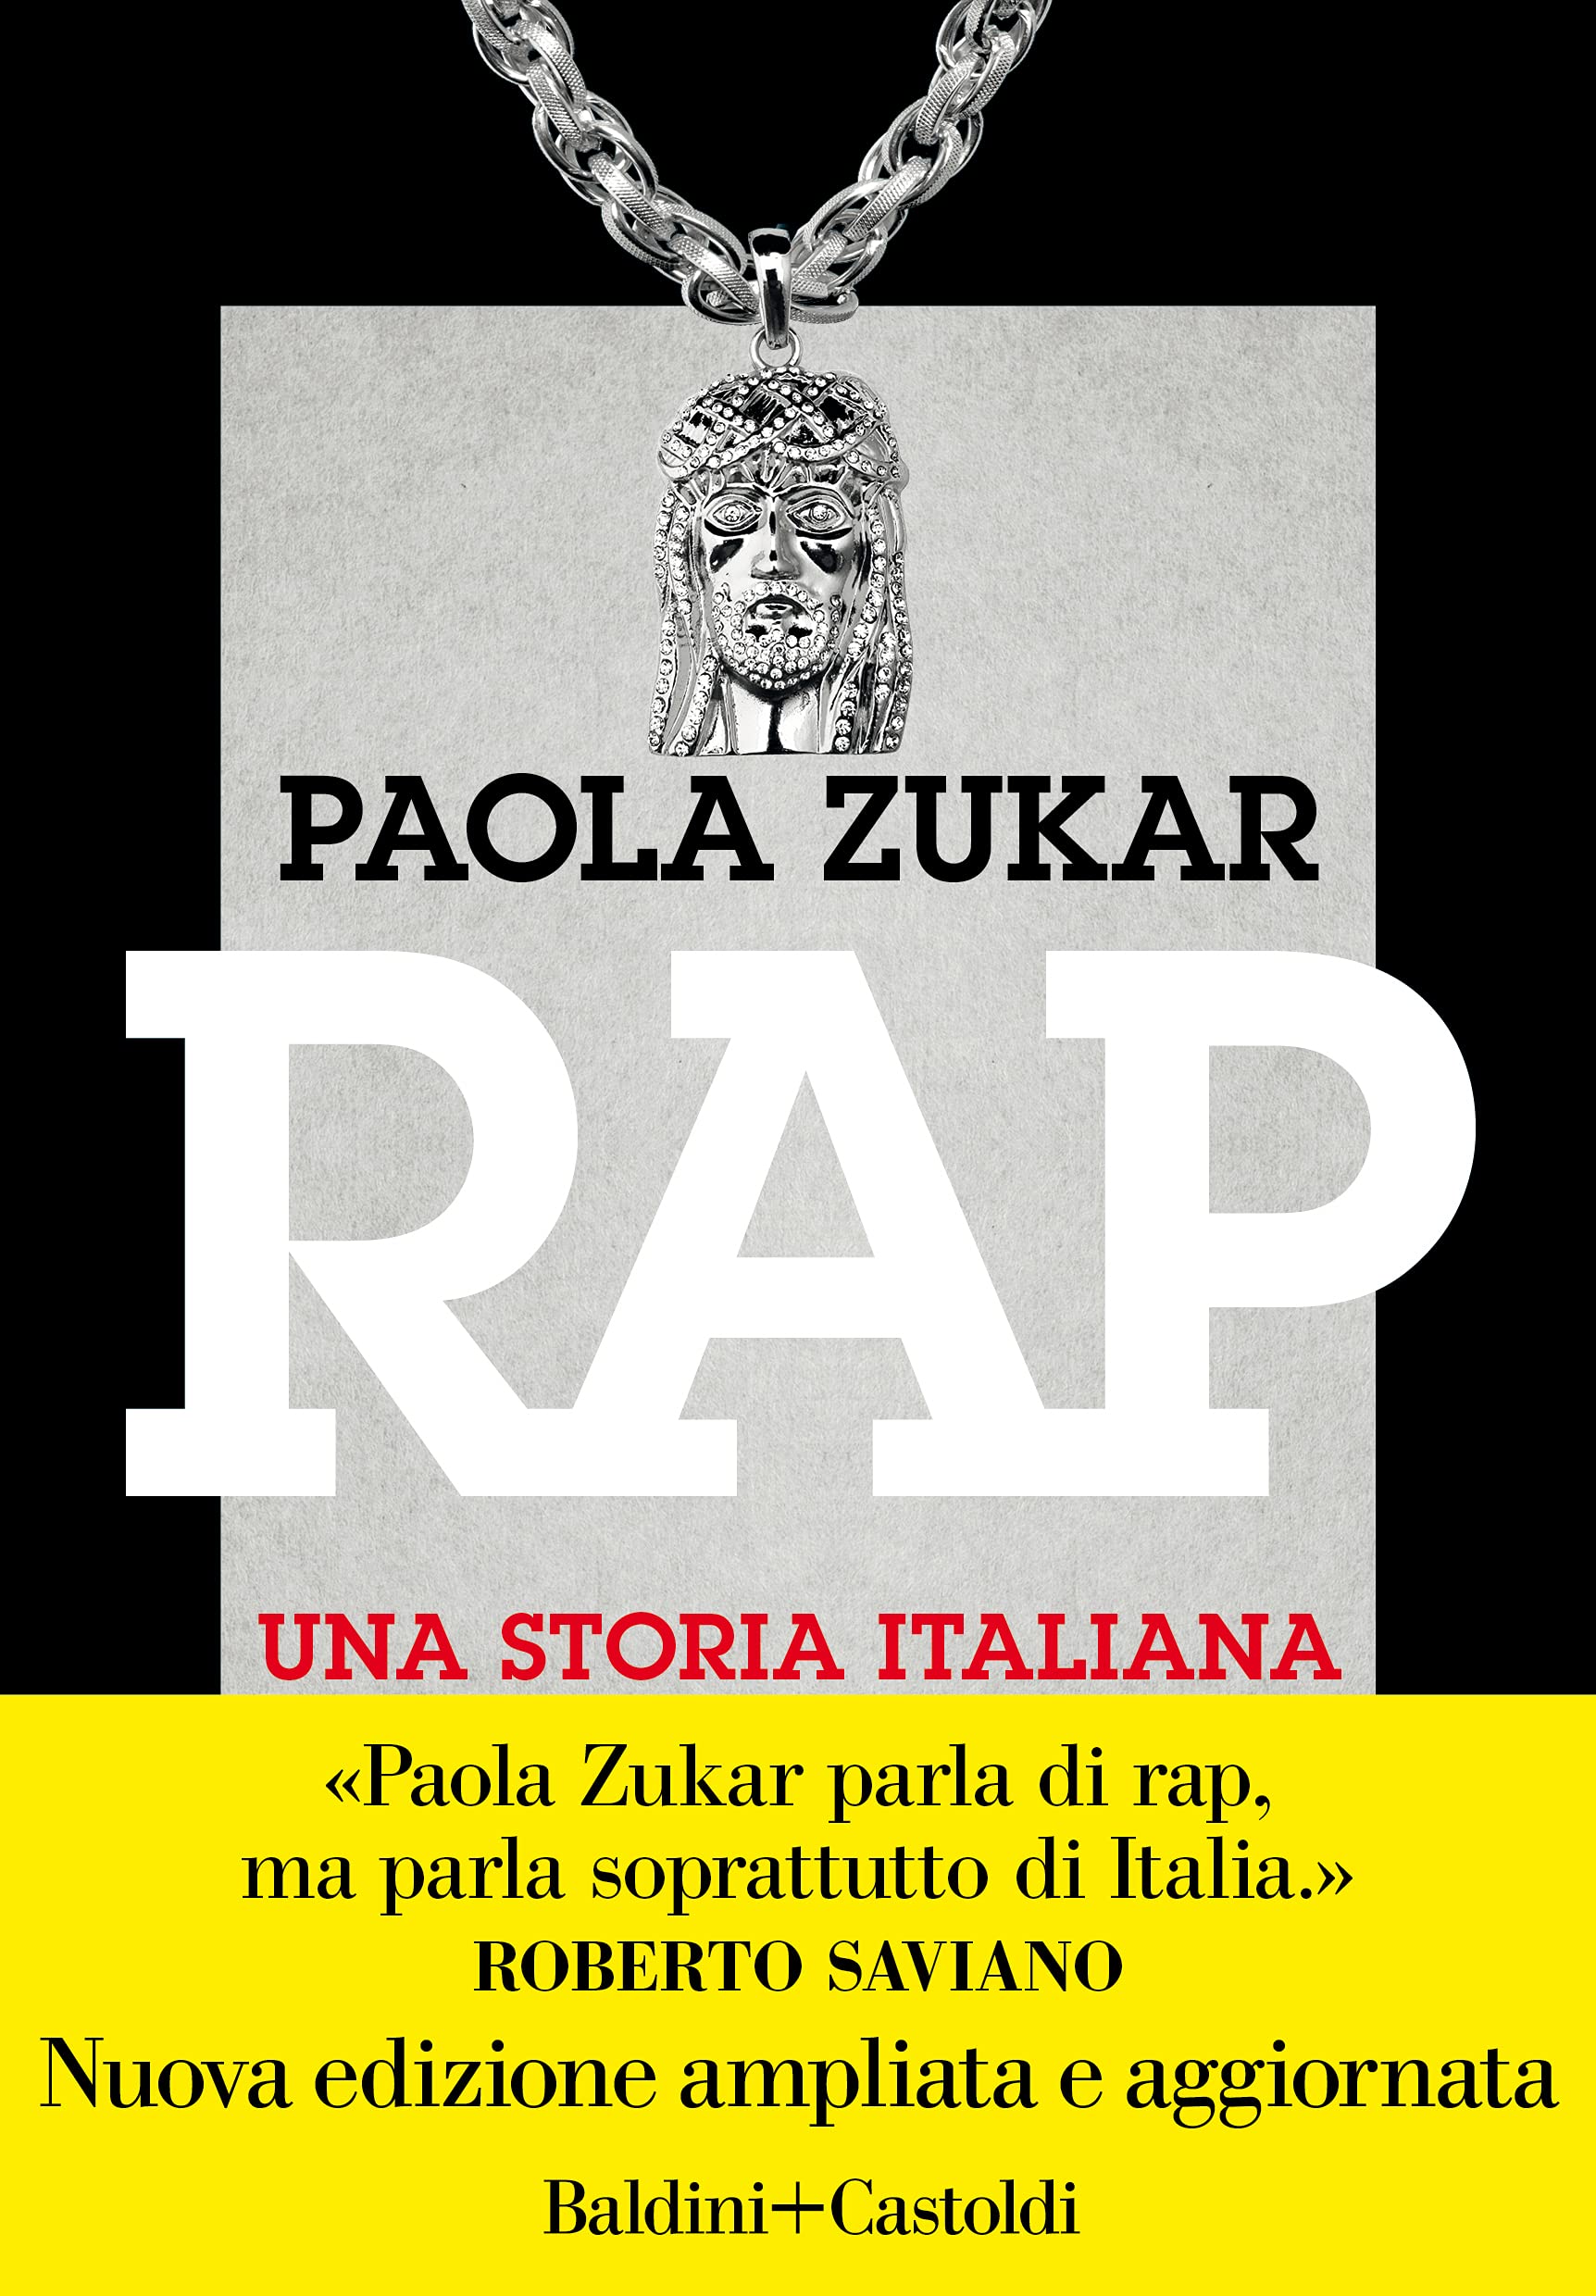  Paola Zukar, Rap. Una storia italiana